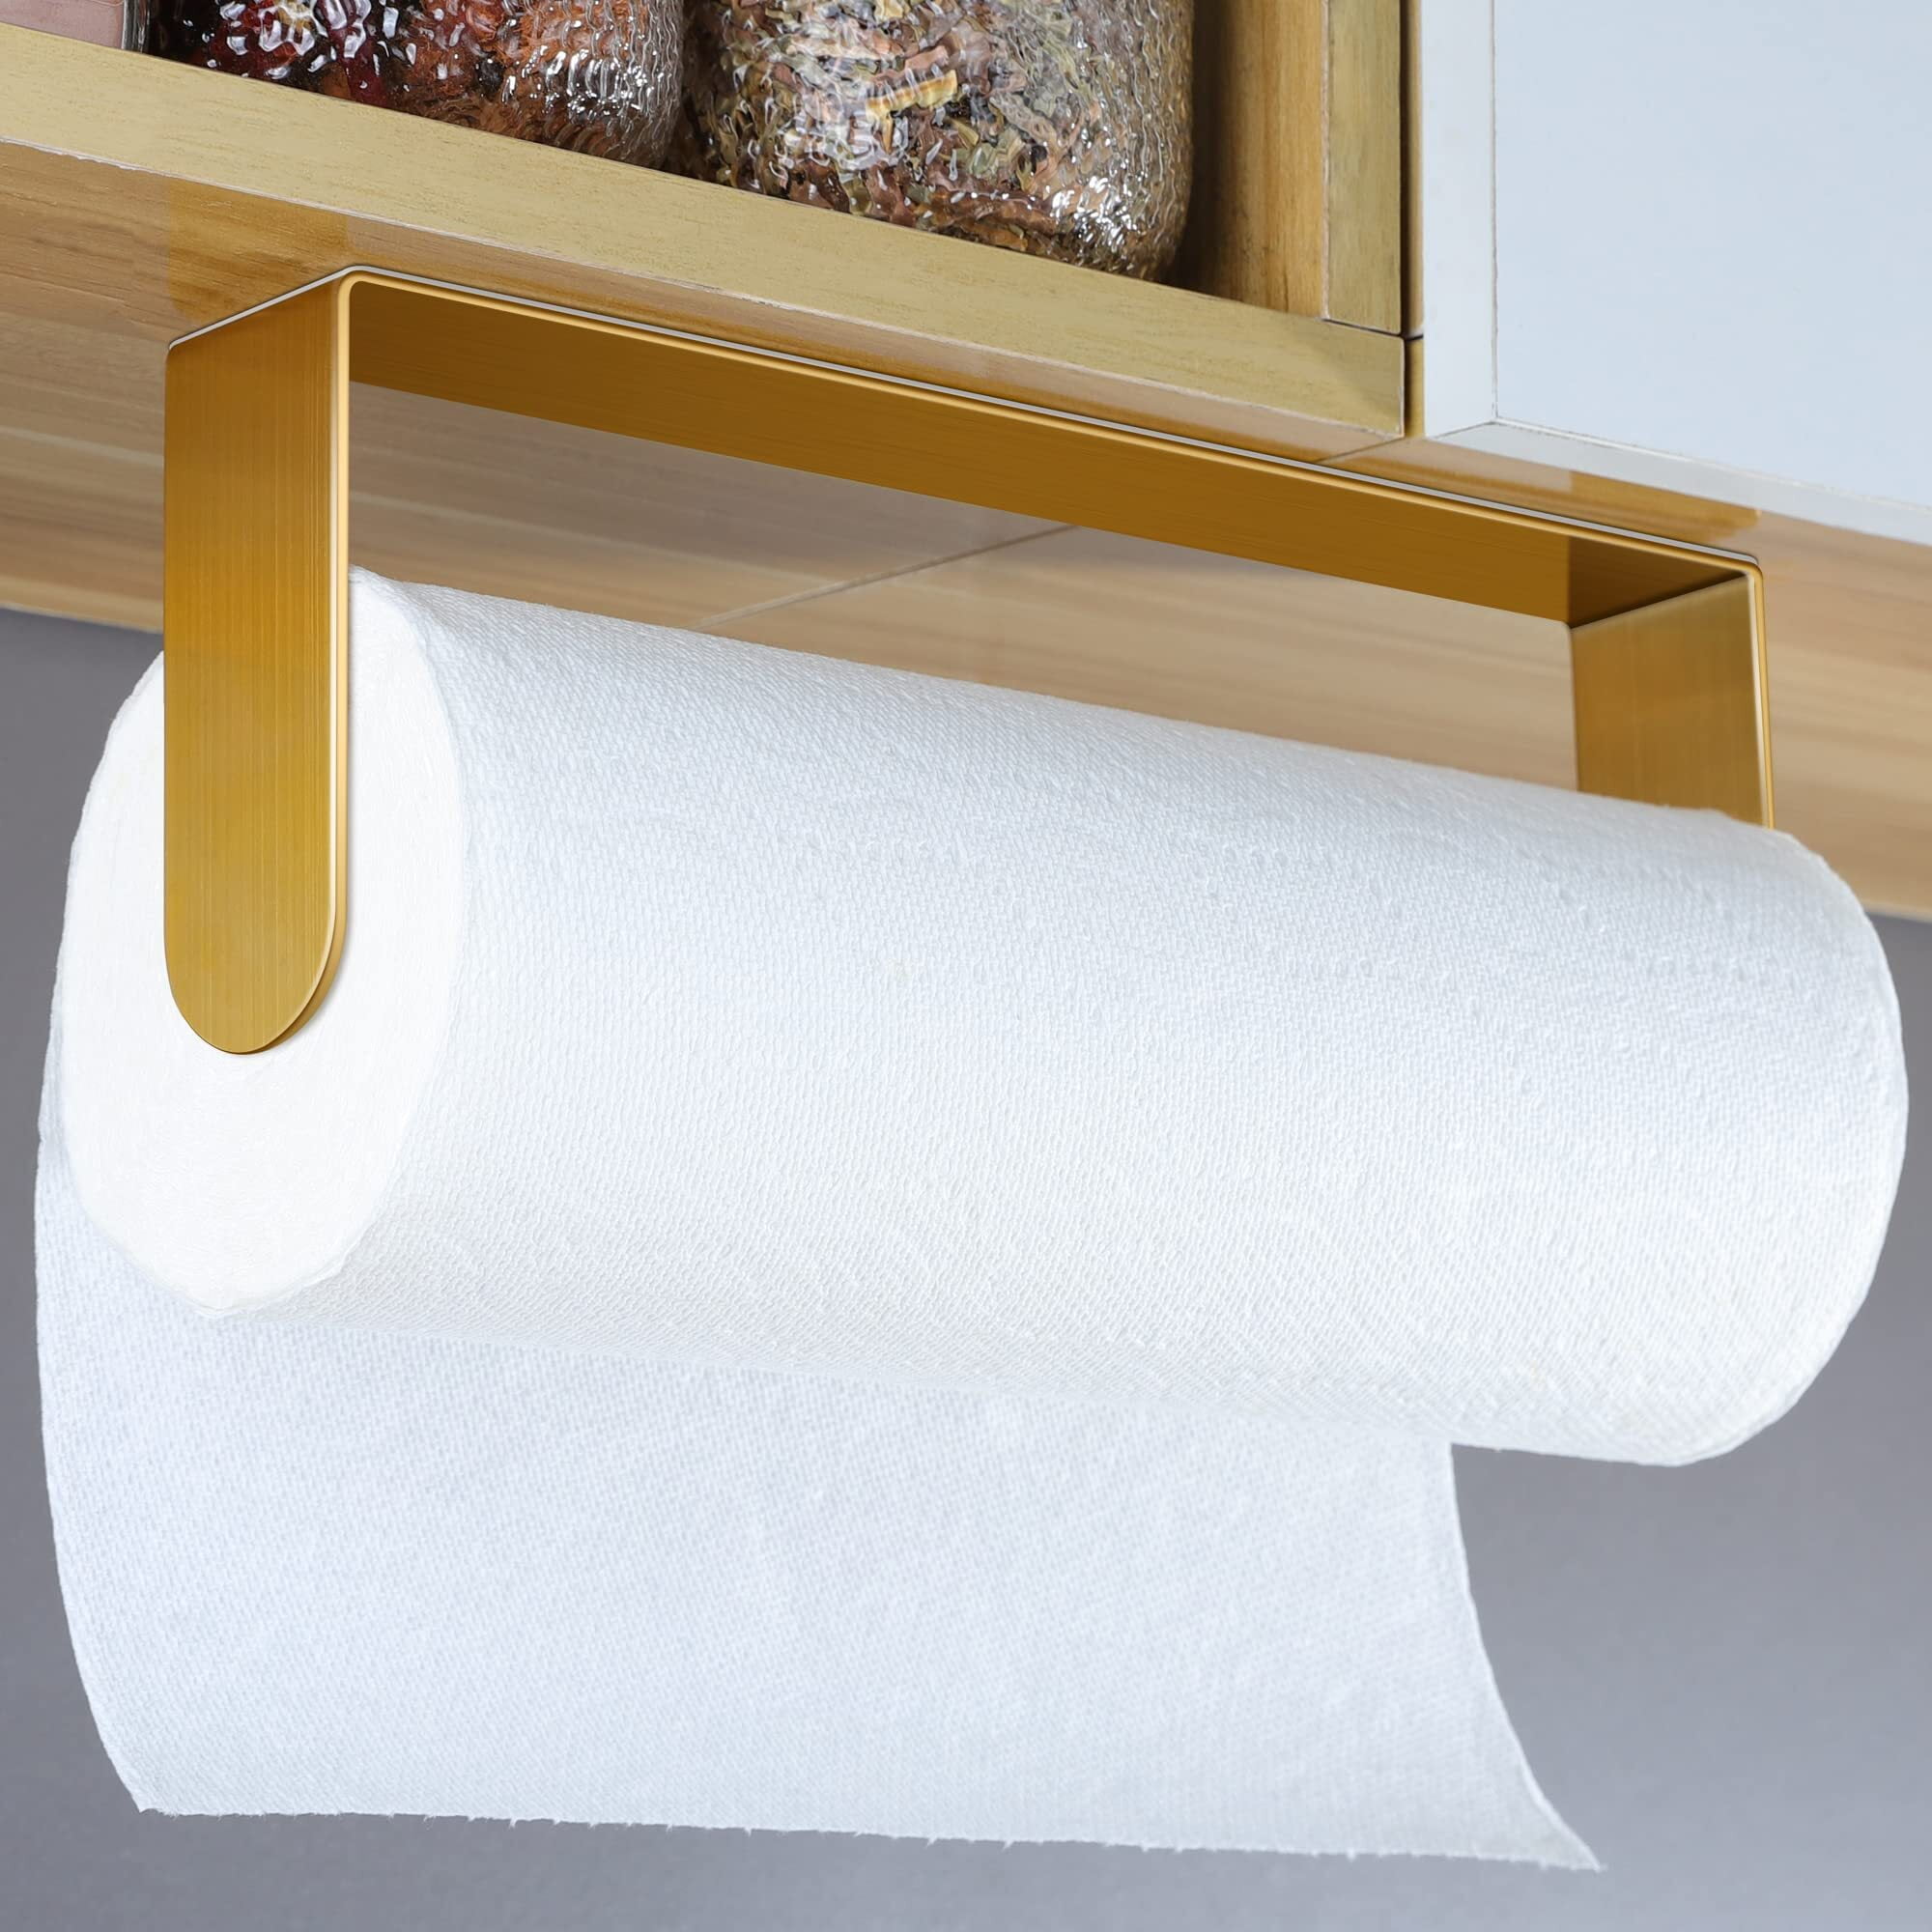 YIGII Hand Towel Rack Adhesive KH010C - Tools for Kitchen & Bathroom